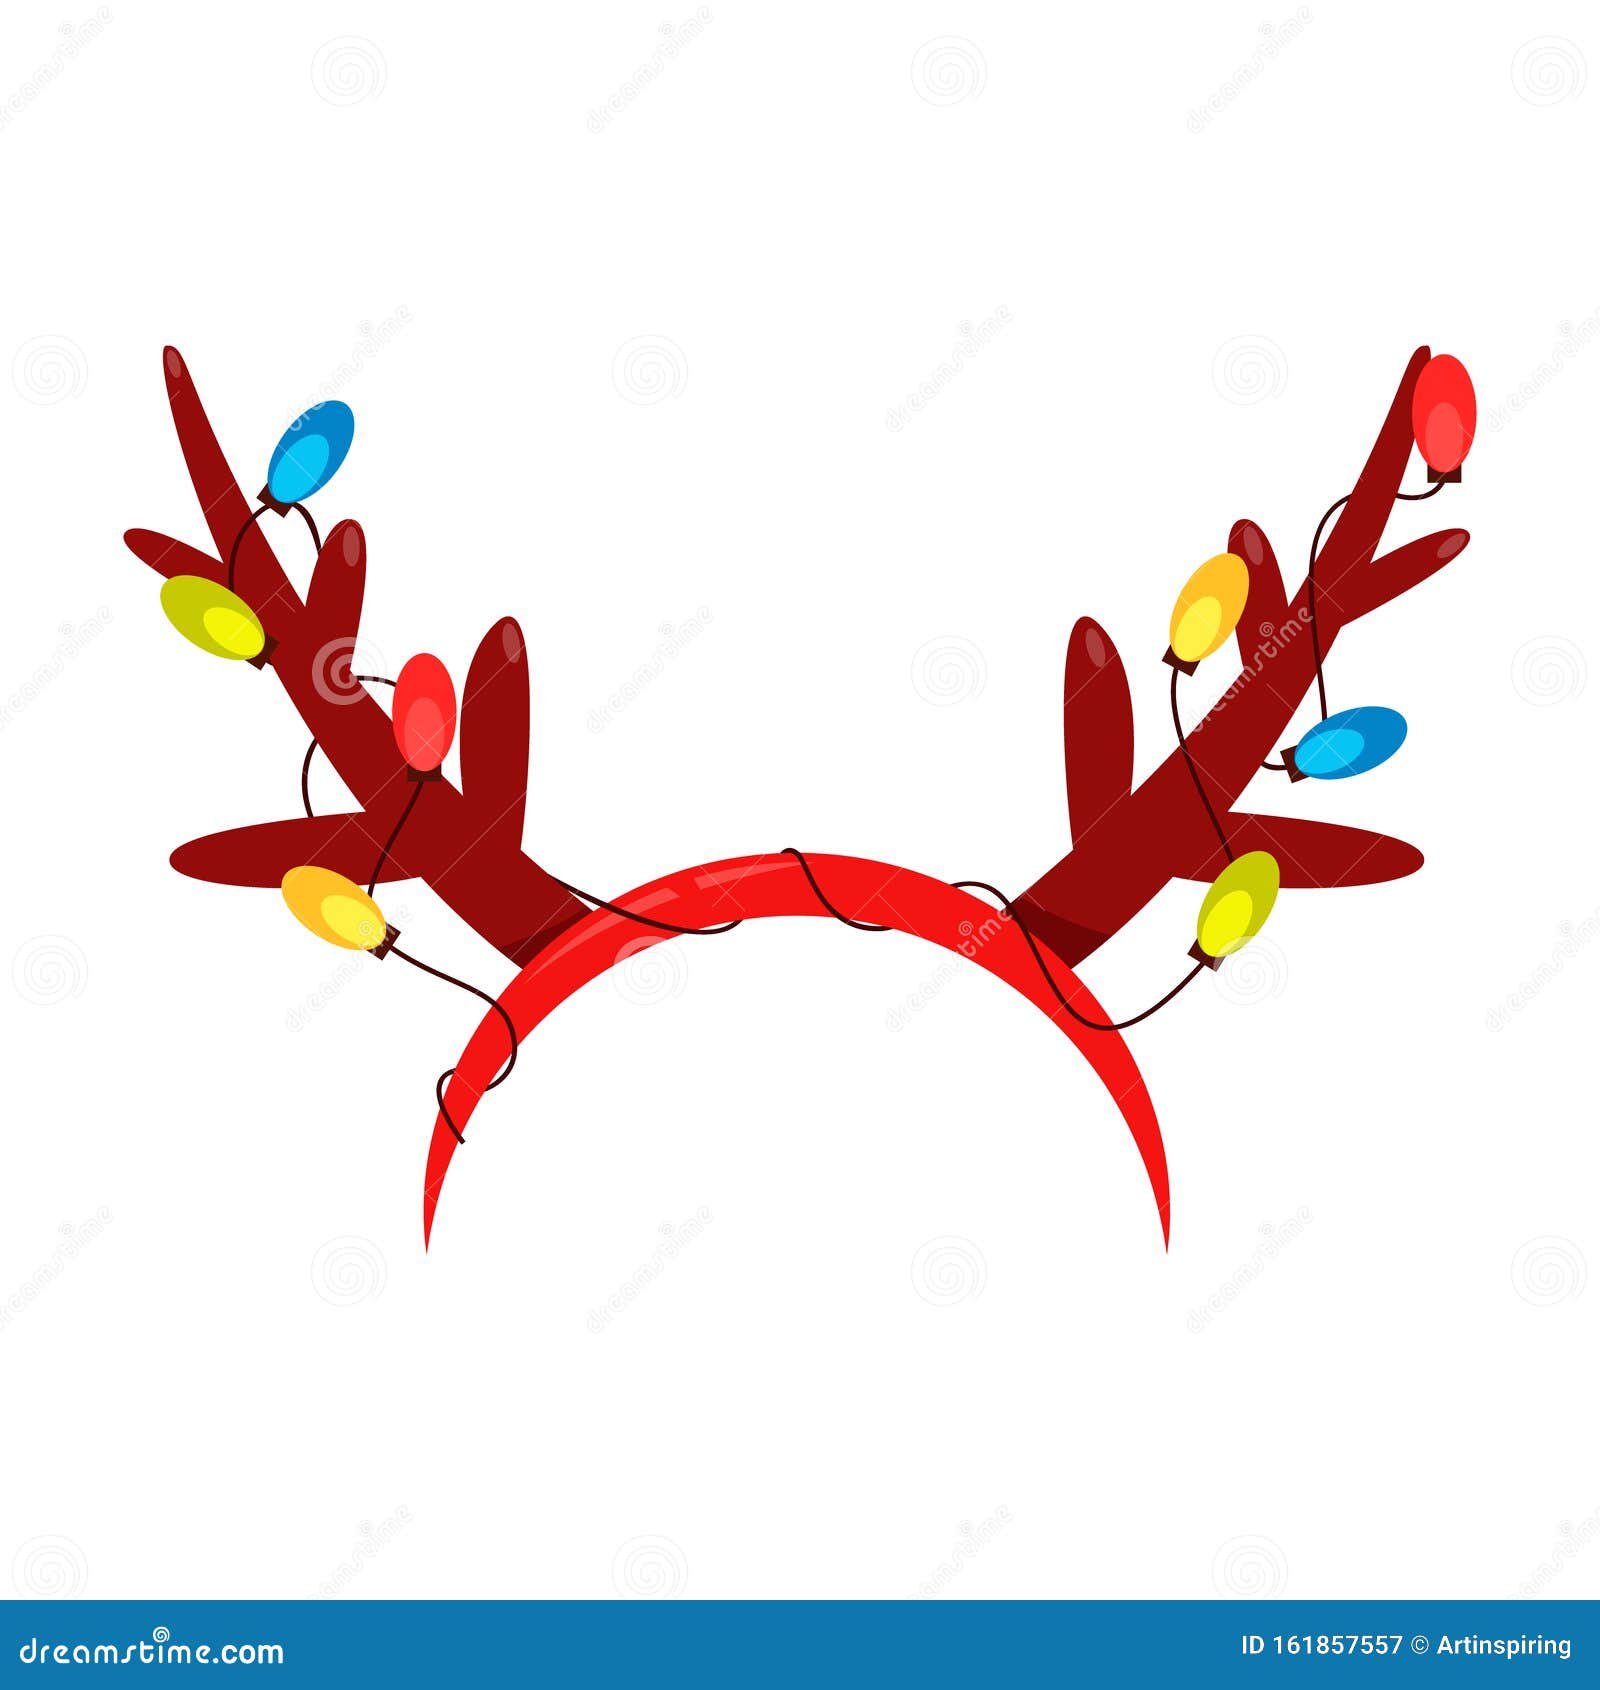  holiday icon of brown reindeer antlers